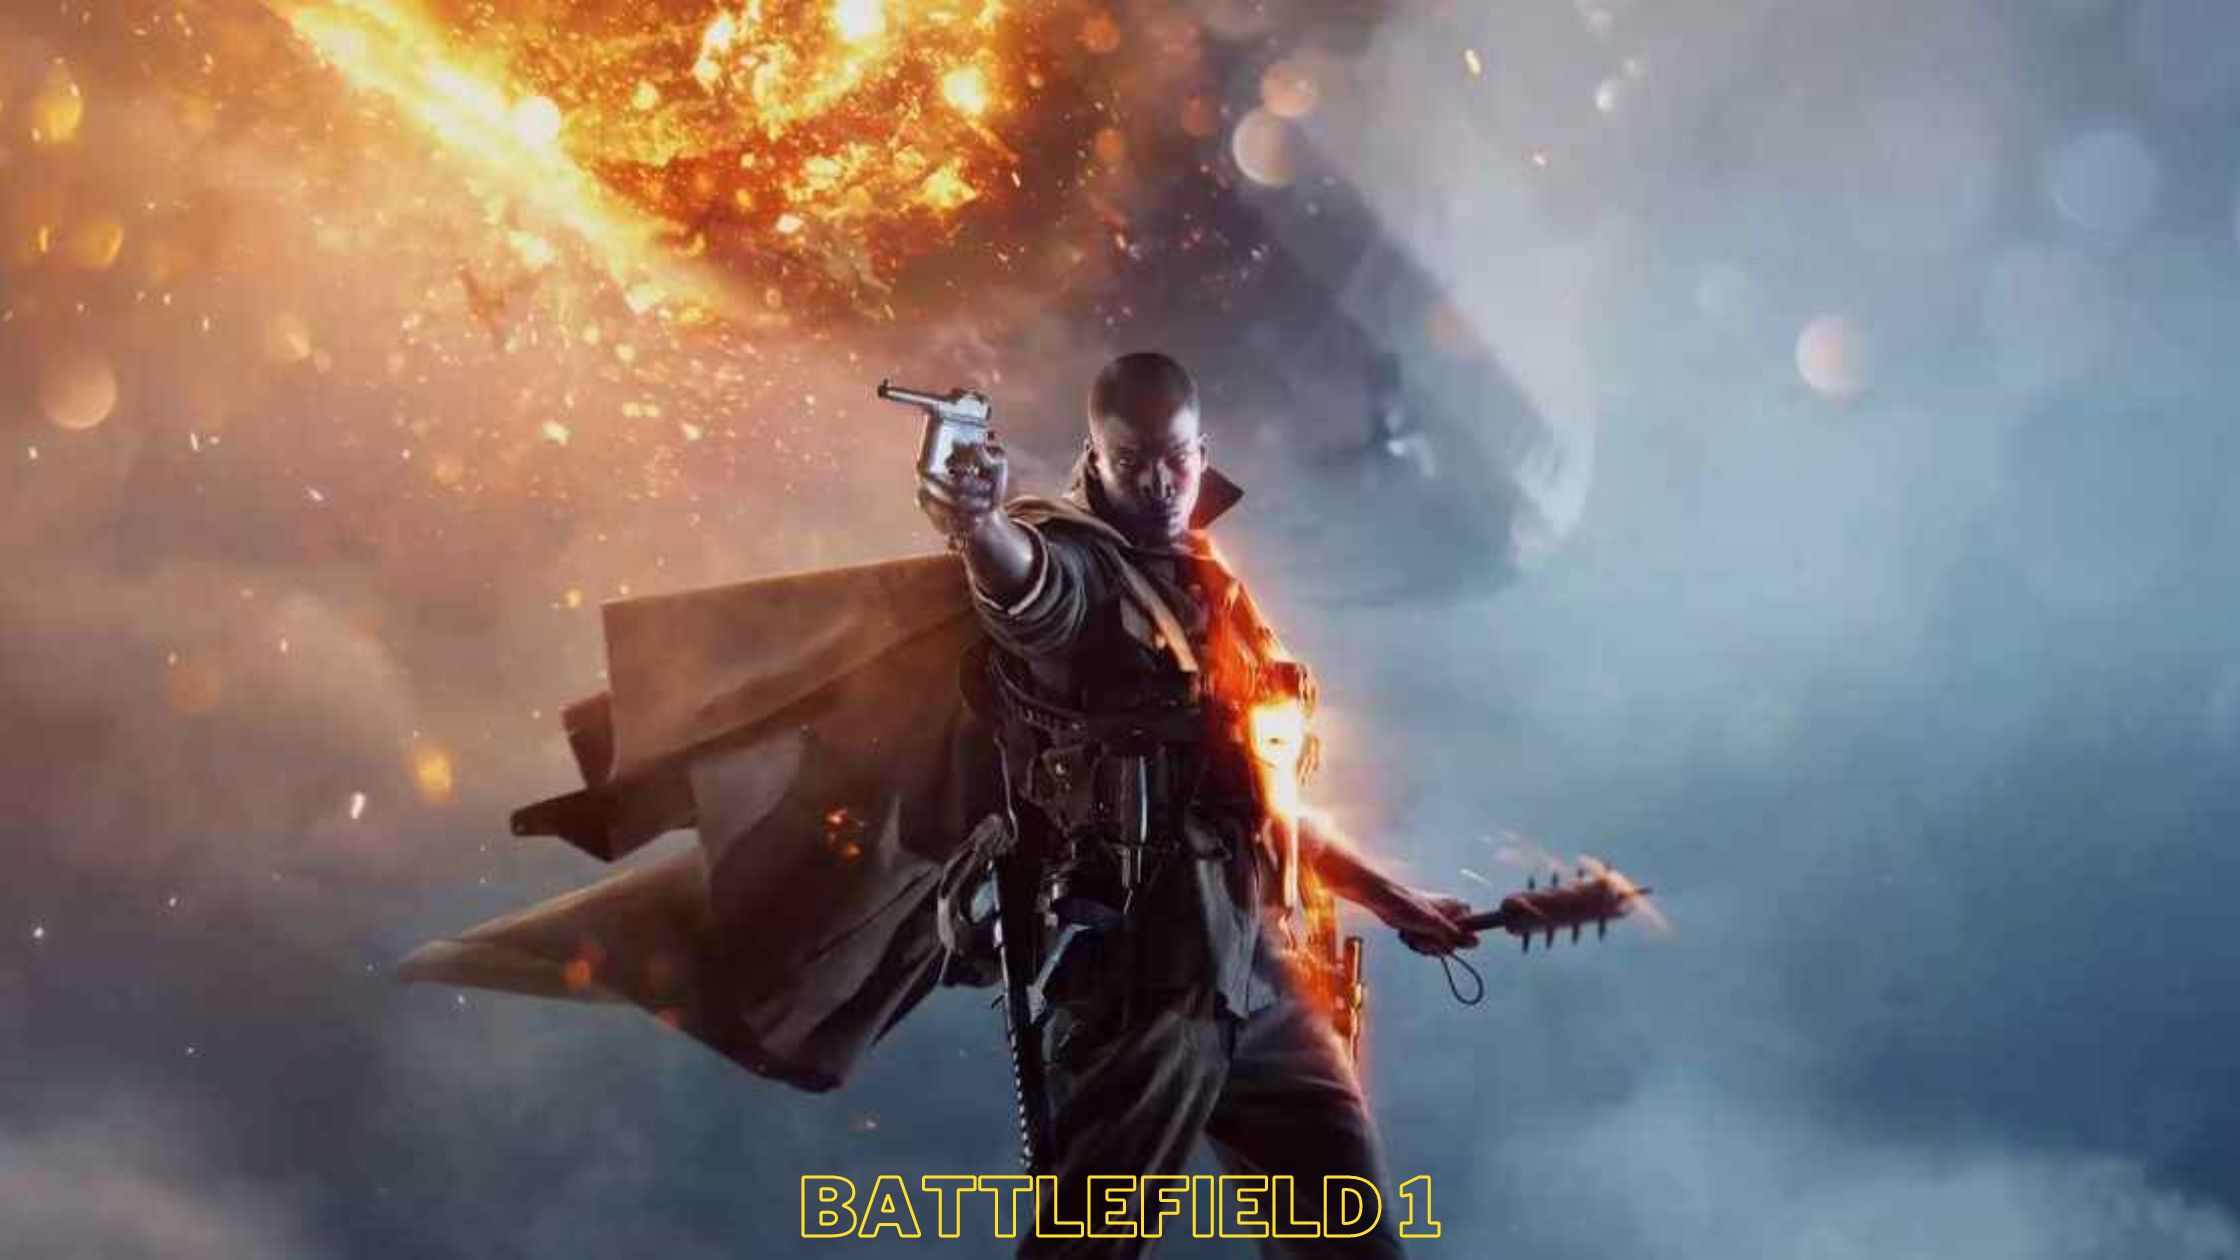 Pixel 3 Battlefield 1 Images - Pixel 3 Battlefield V